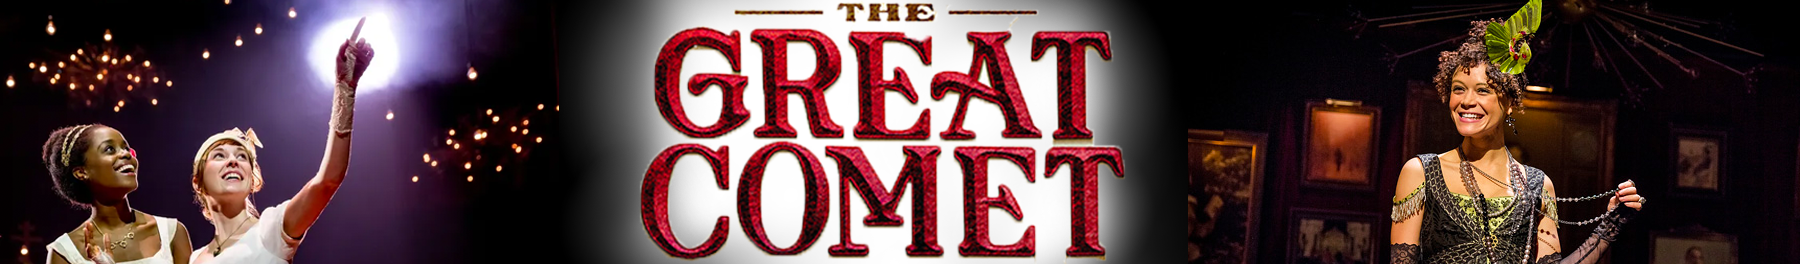 Natasha, Pierre & The Great Comet of 1812 Broadway Show